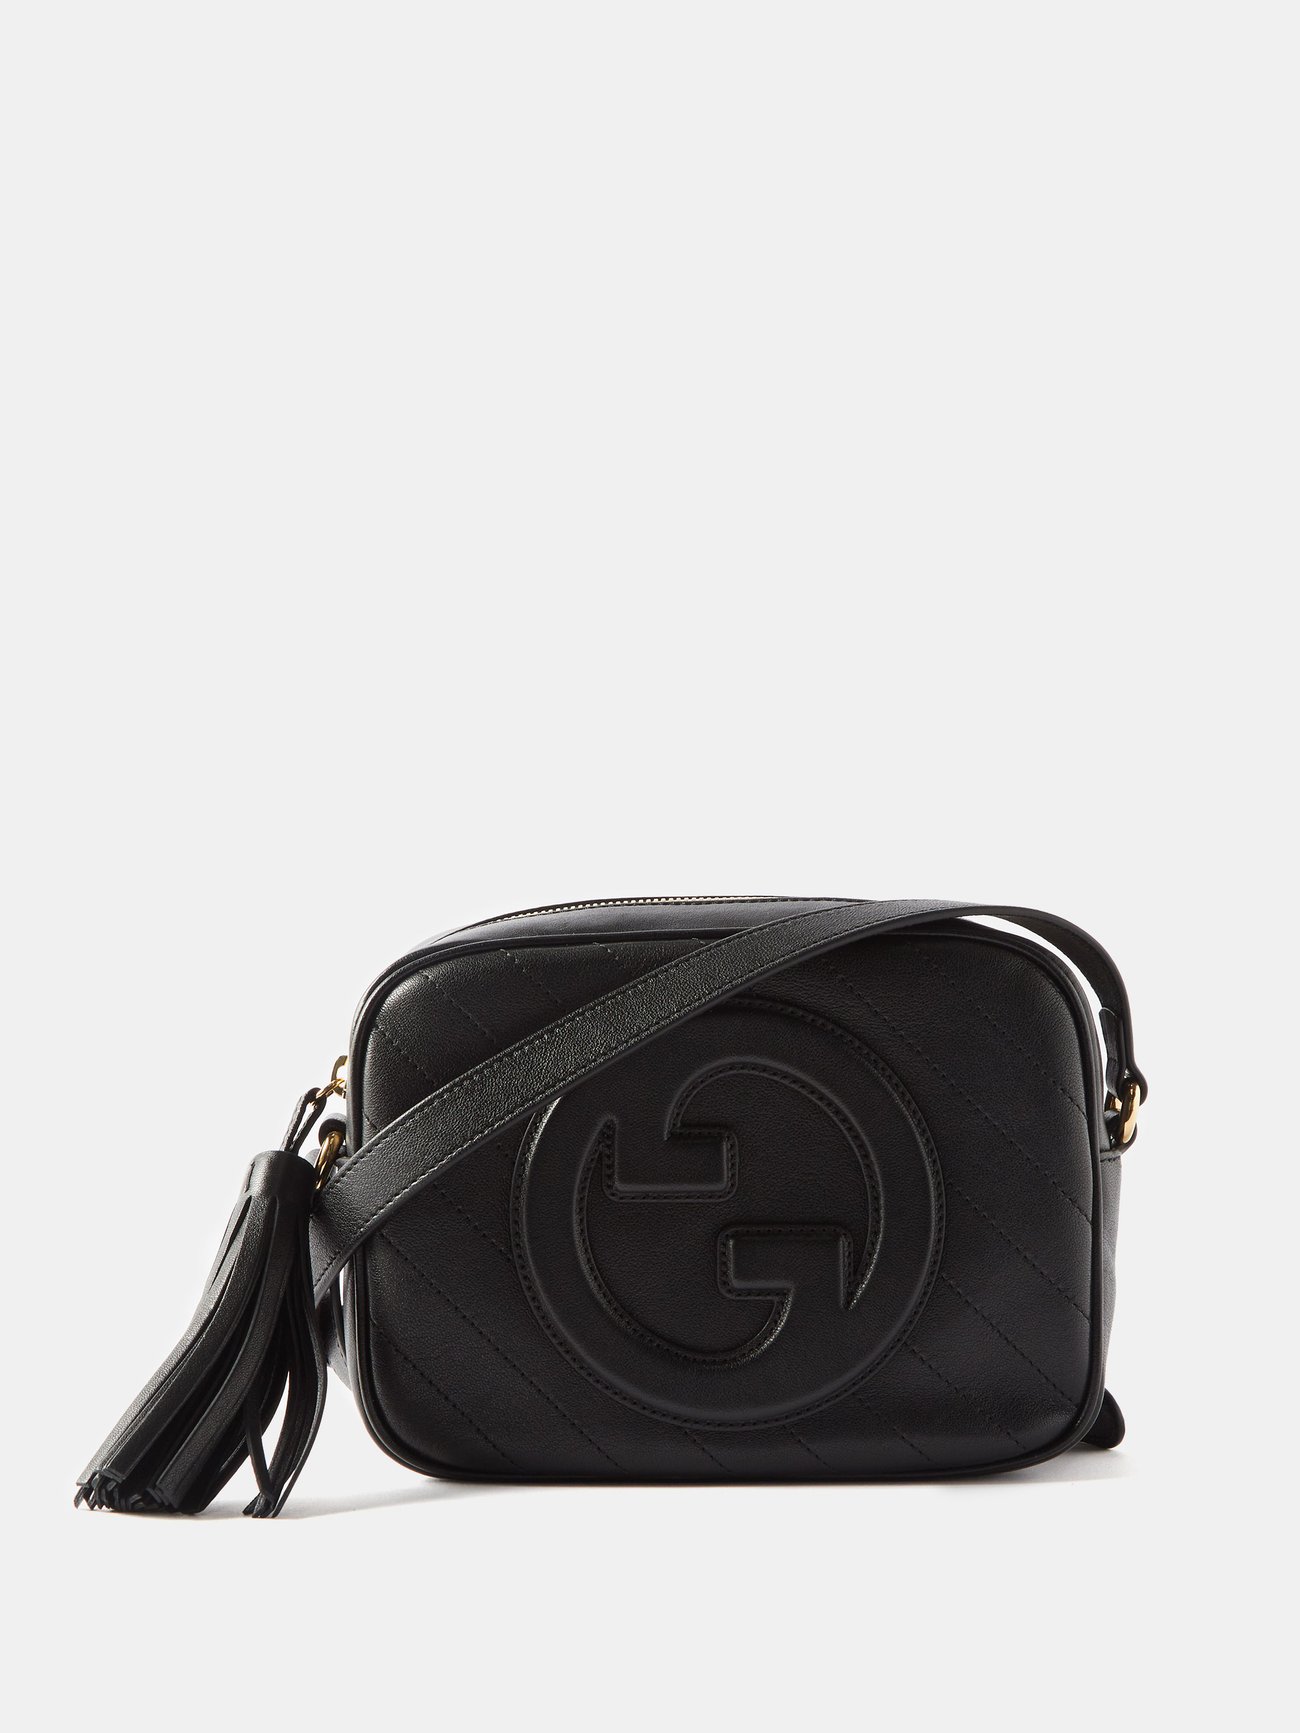 Gucci Purse | Fashion bags, Gucci handbags, Bags